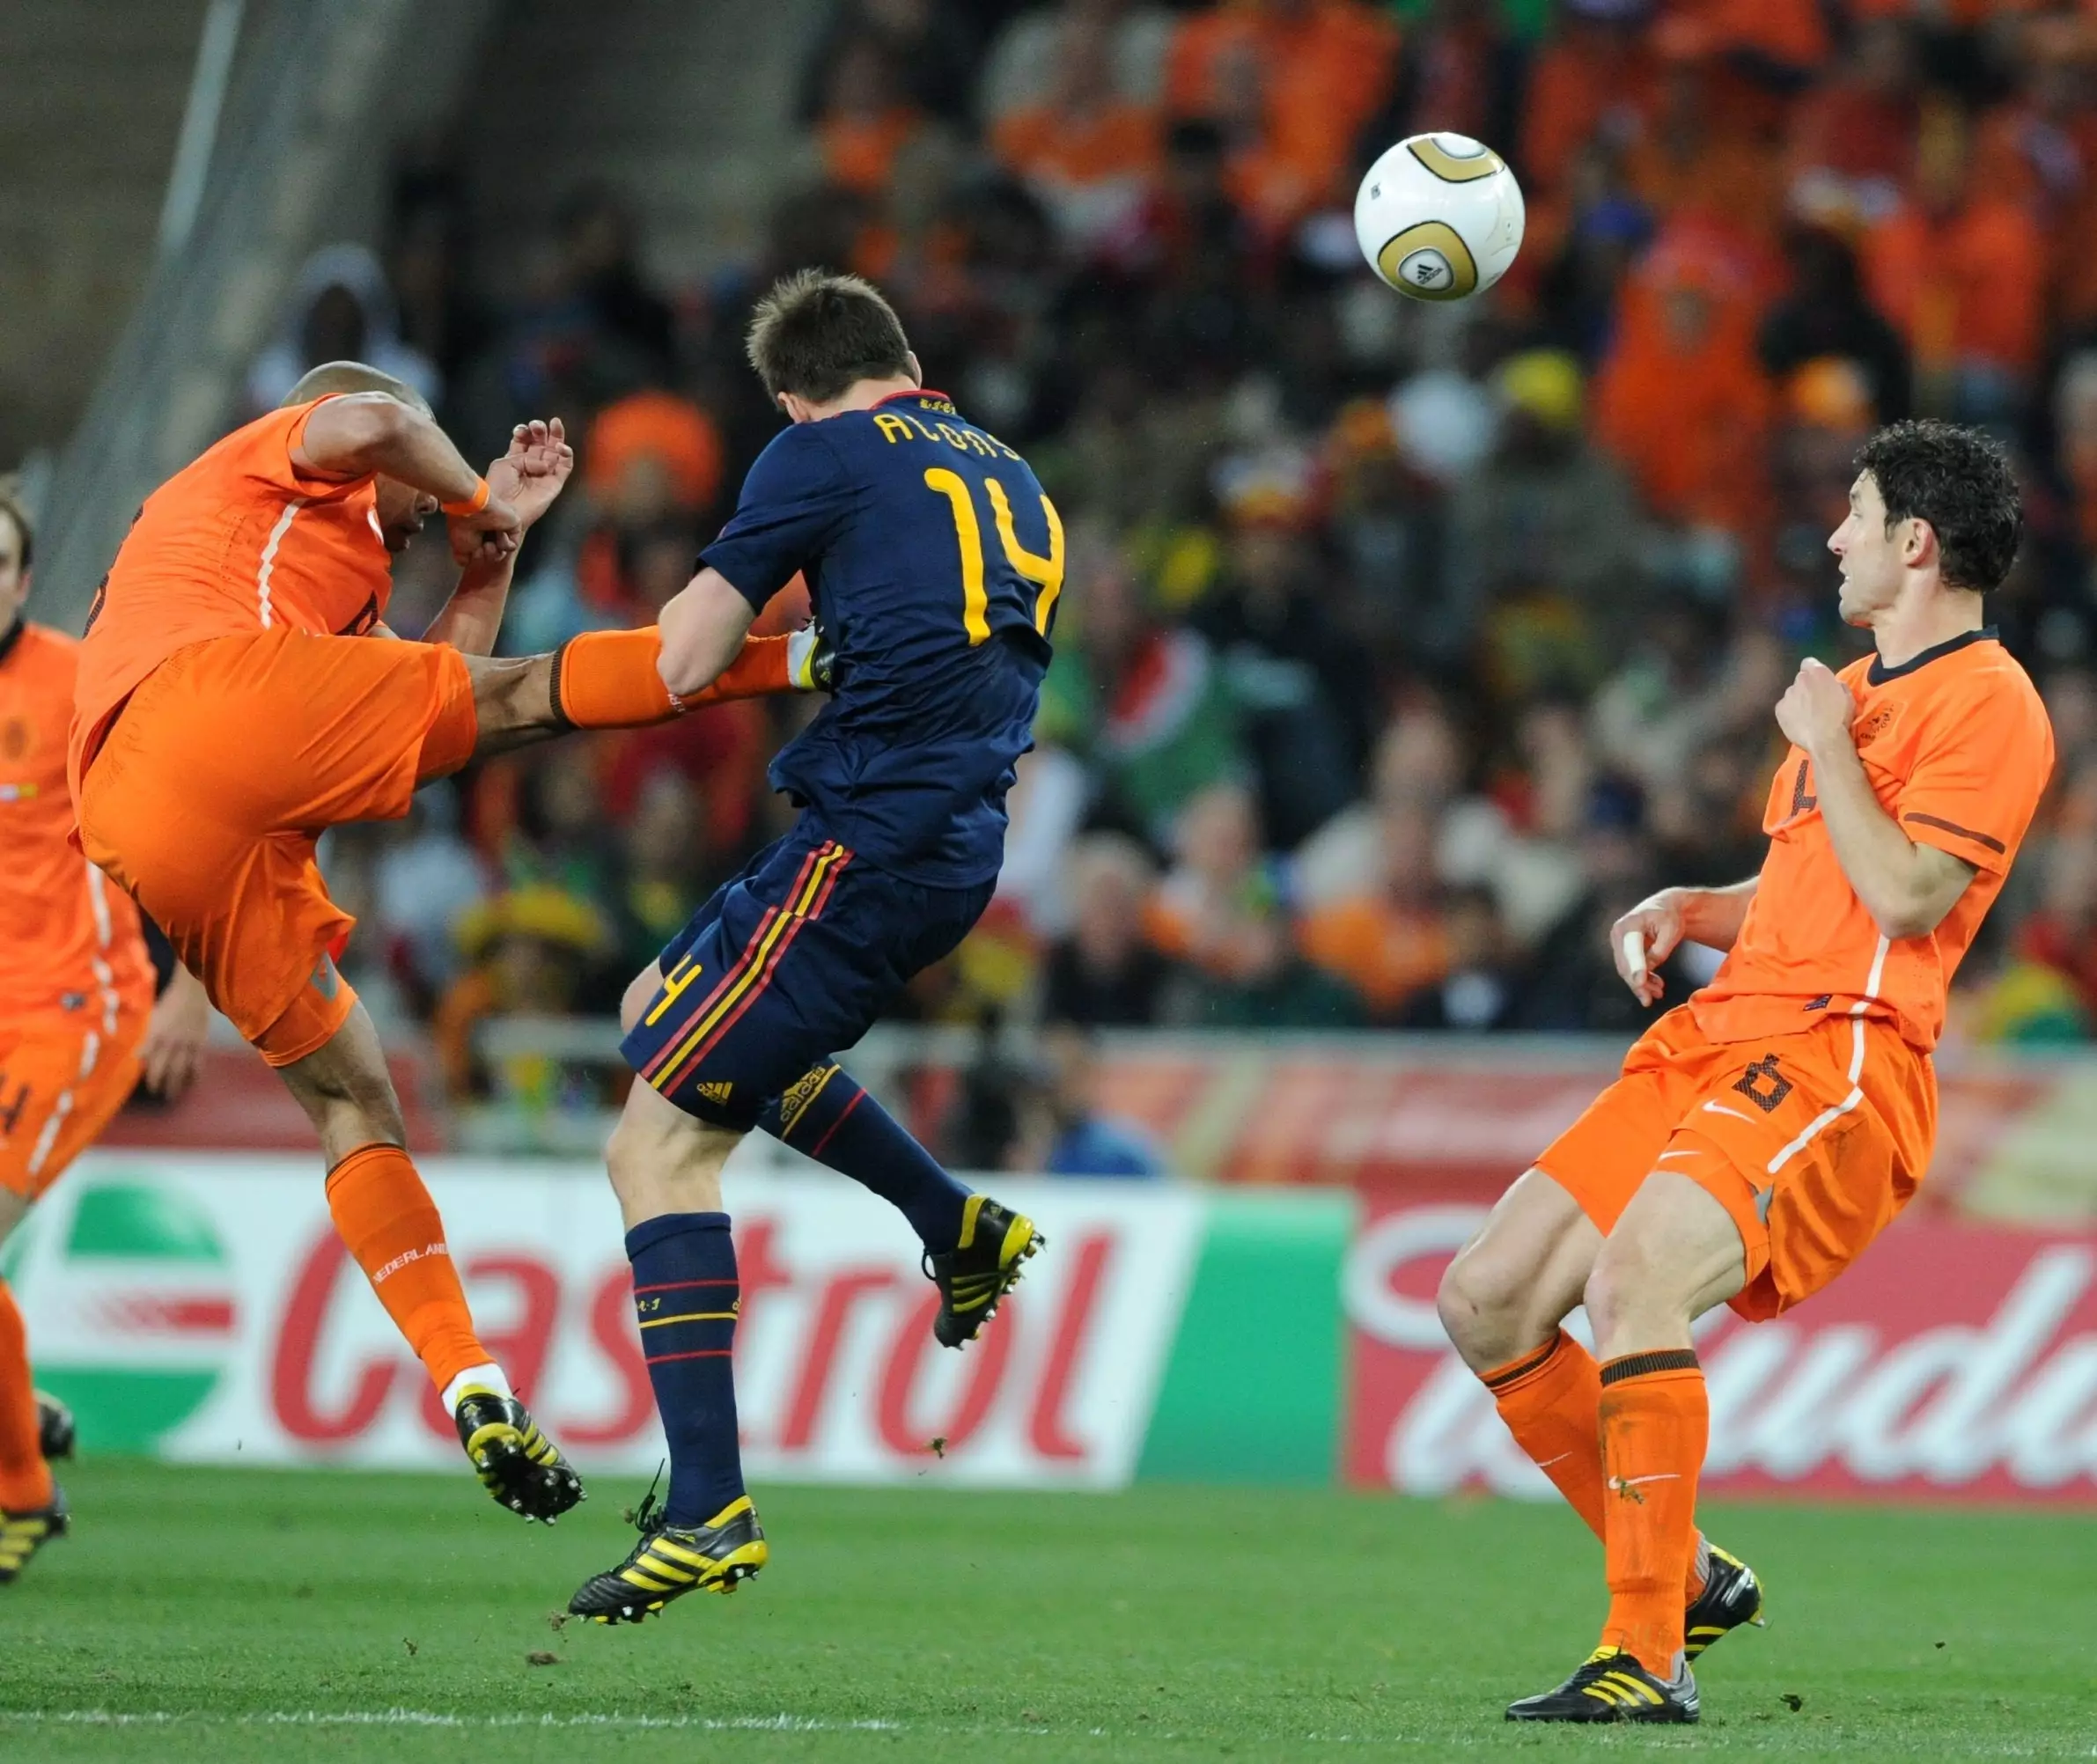 De Jong's kick on Xabi Alonso is too iconic for just one angle. Image: PA Images.